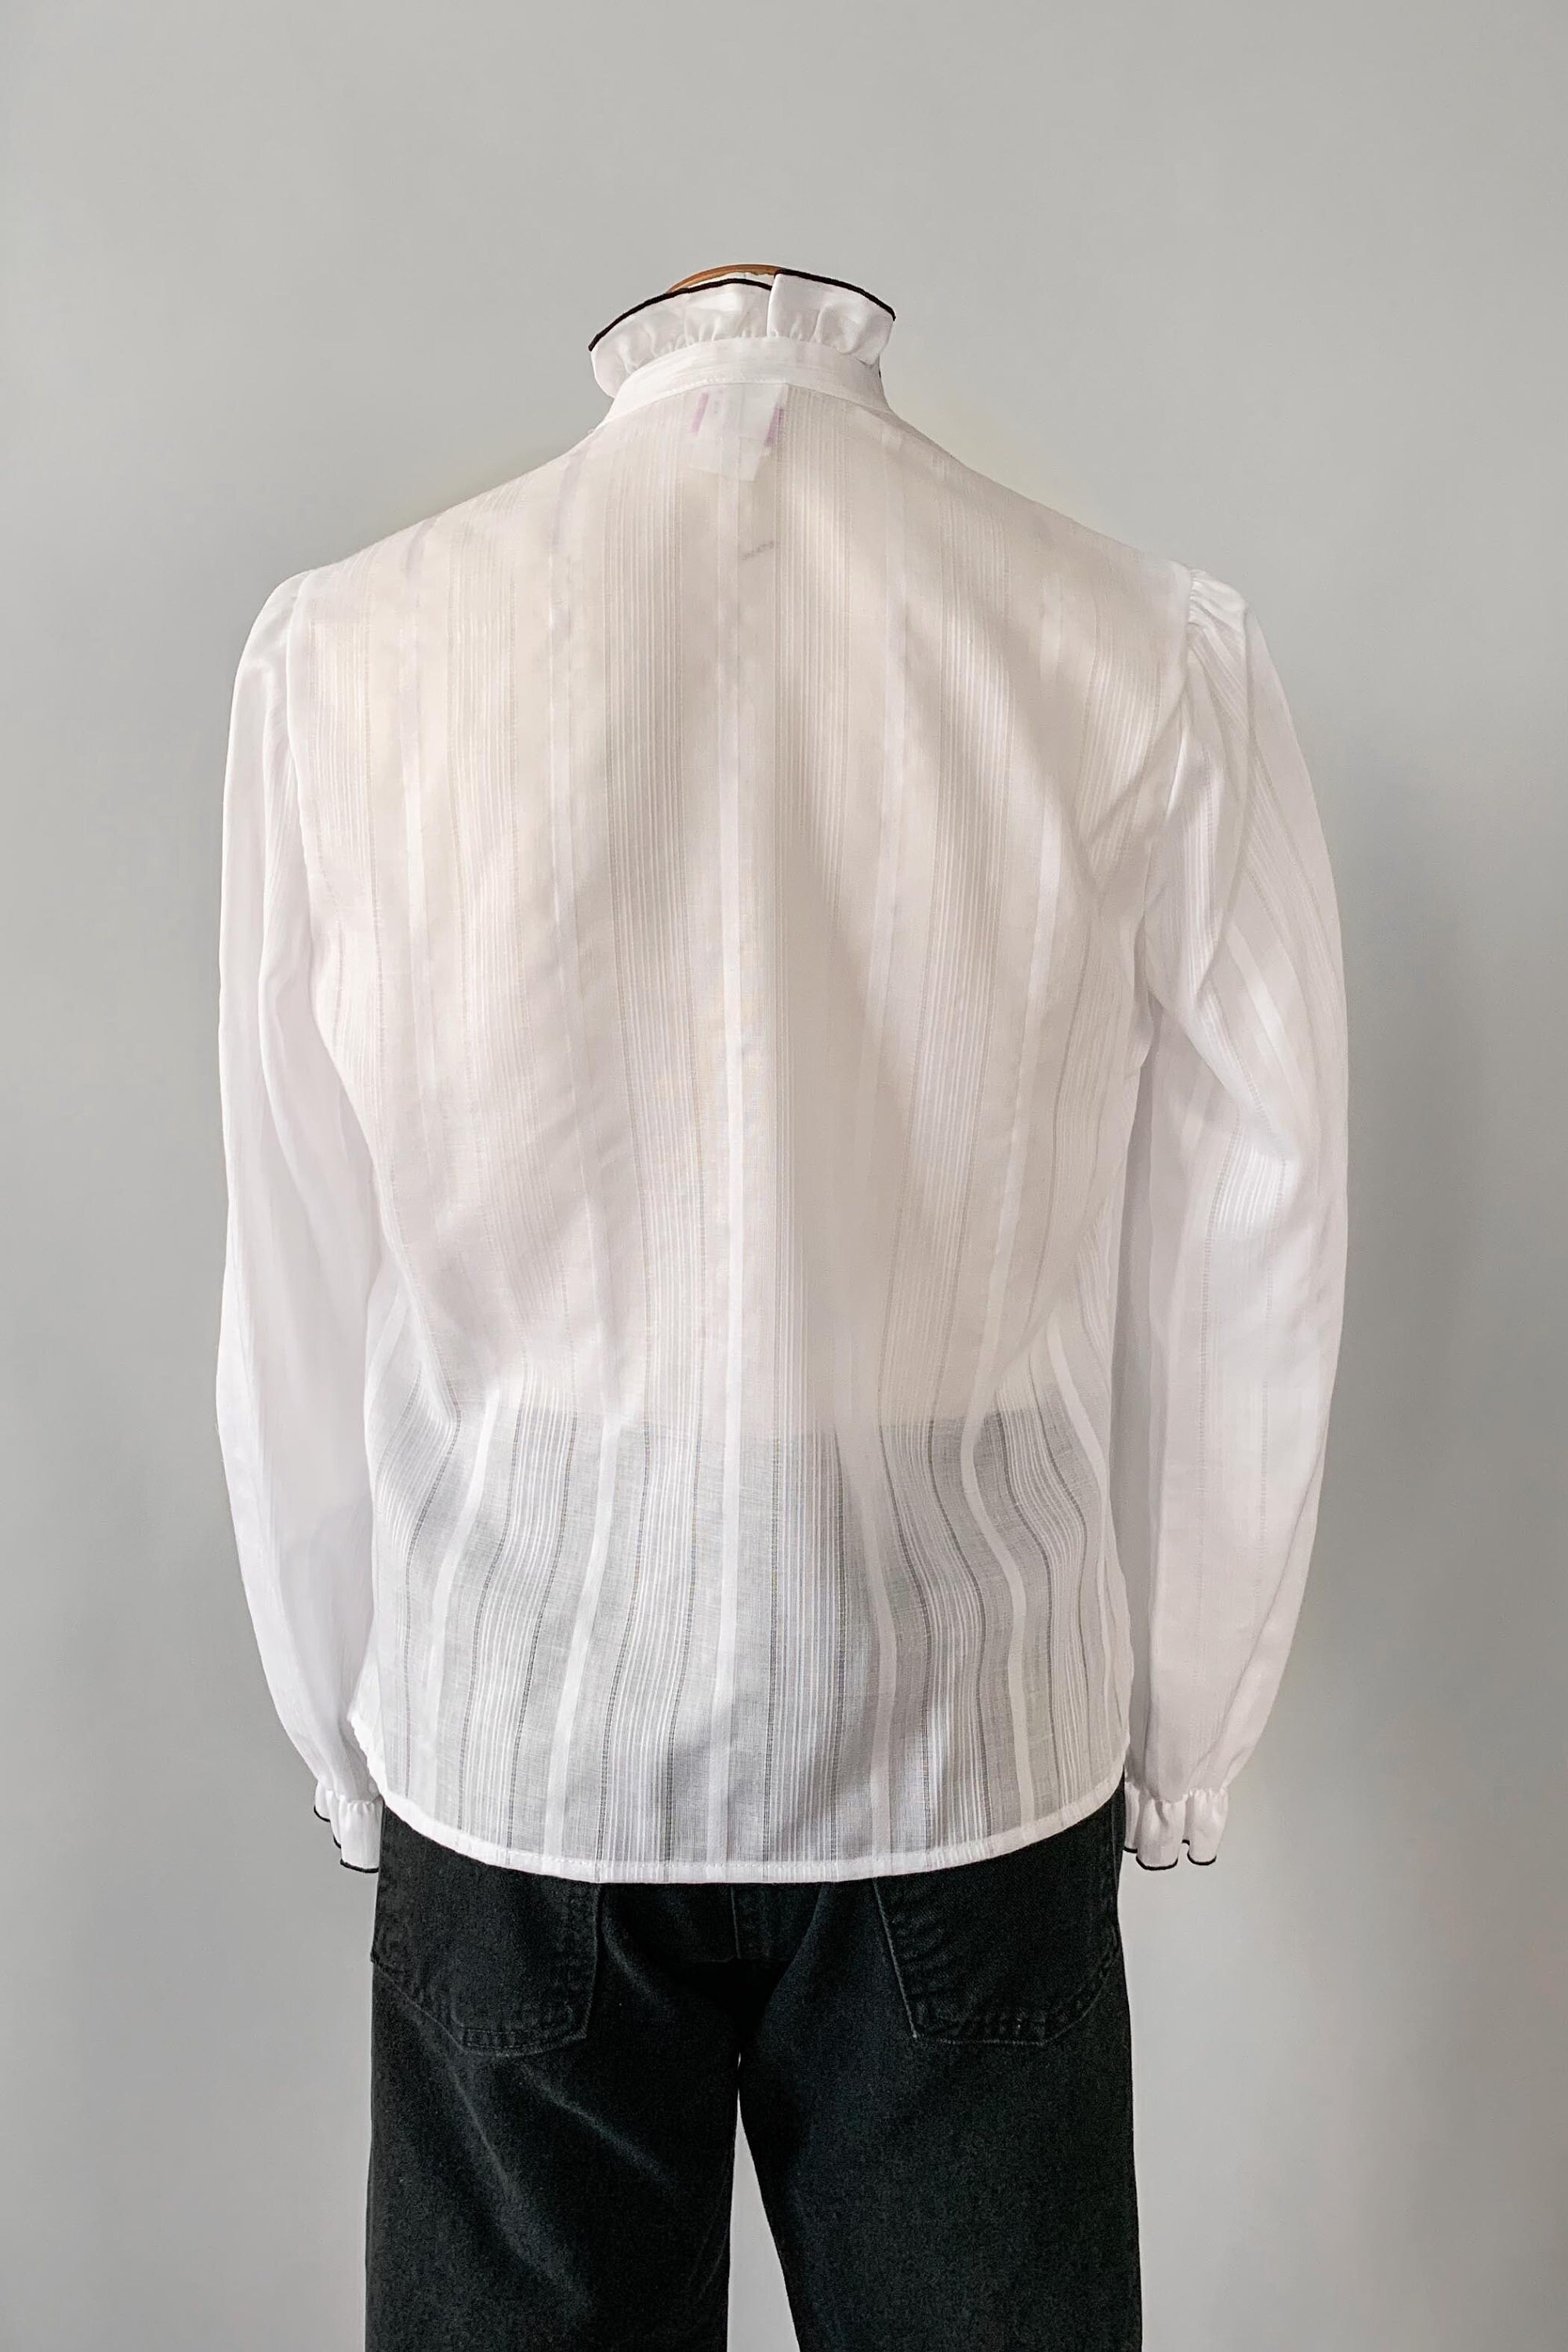 Vintage 1980s 80s white frilly ruffled tuxedo bow blouse Small S